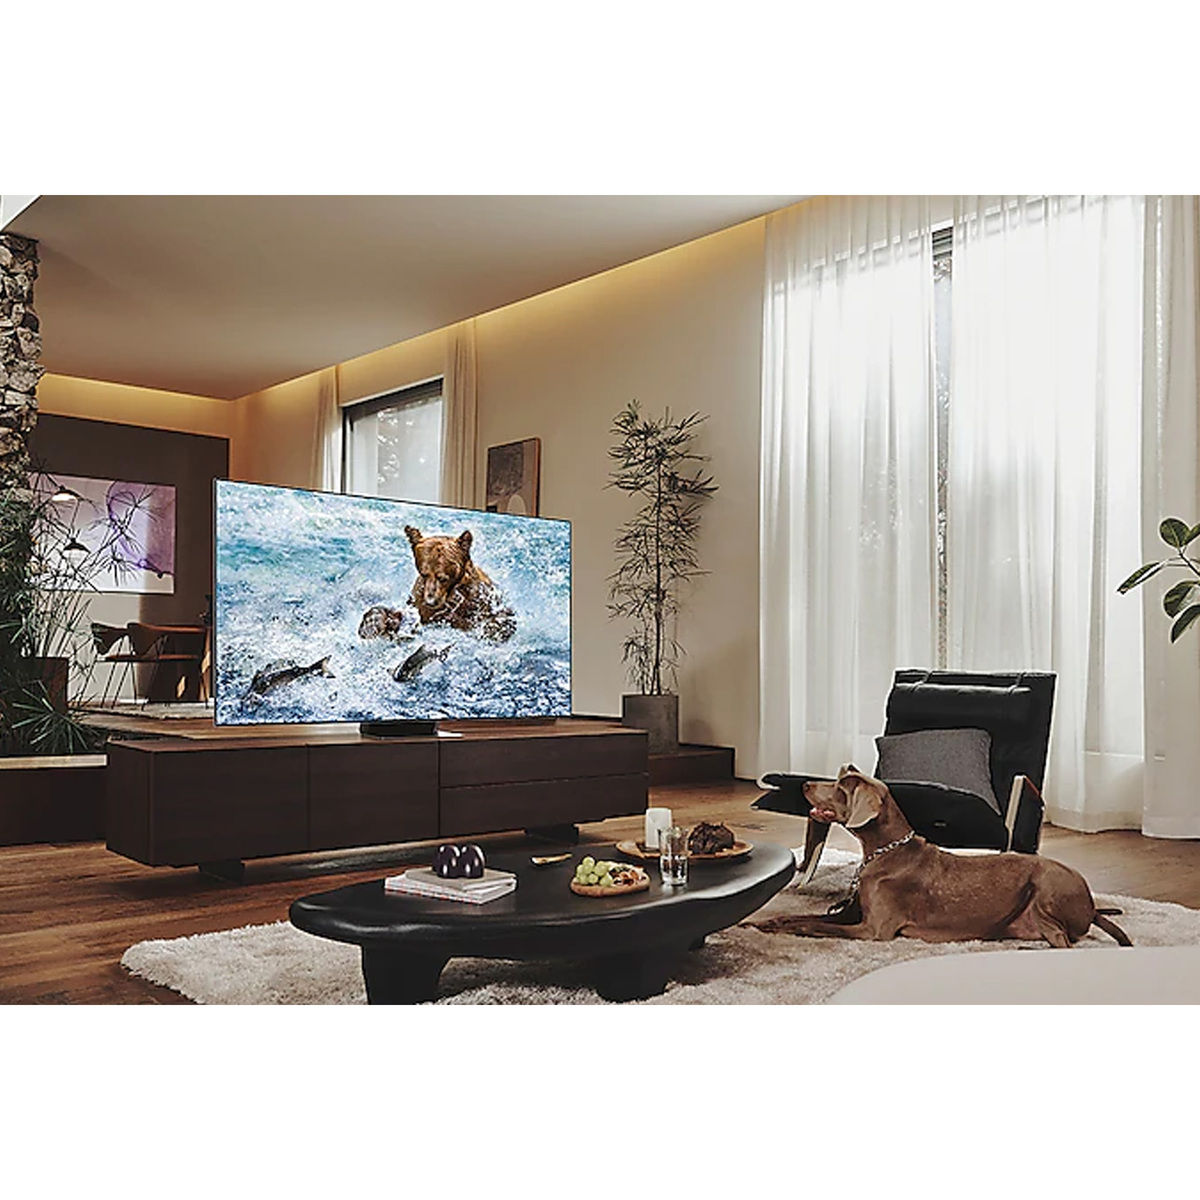 Samsung Neo QLED 8K Smart TV QA55QN700BUXZN 55"